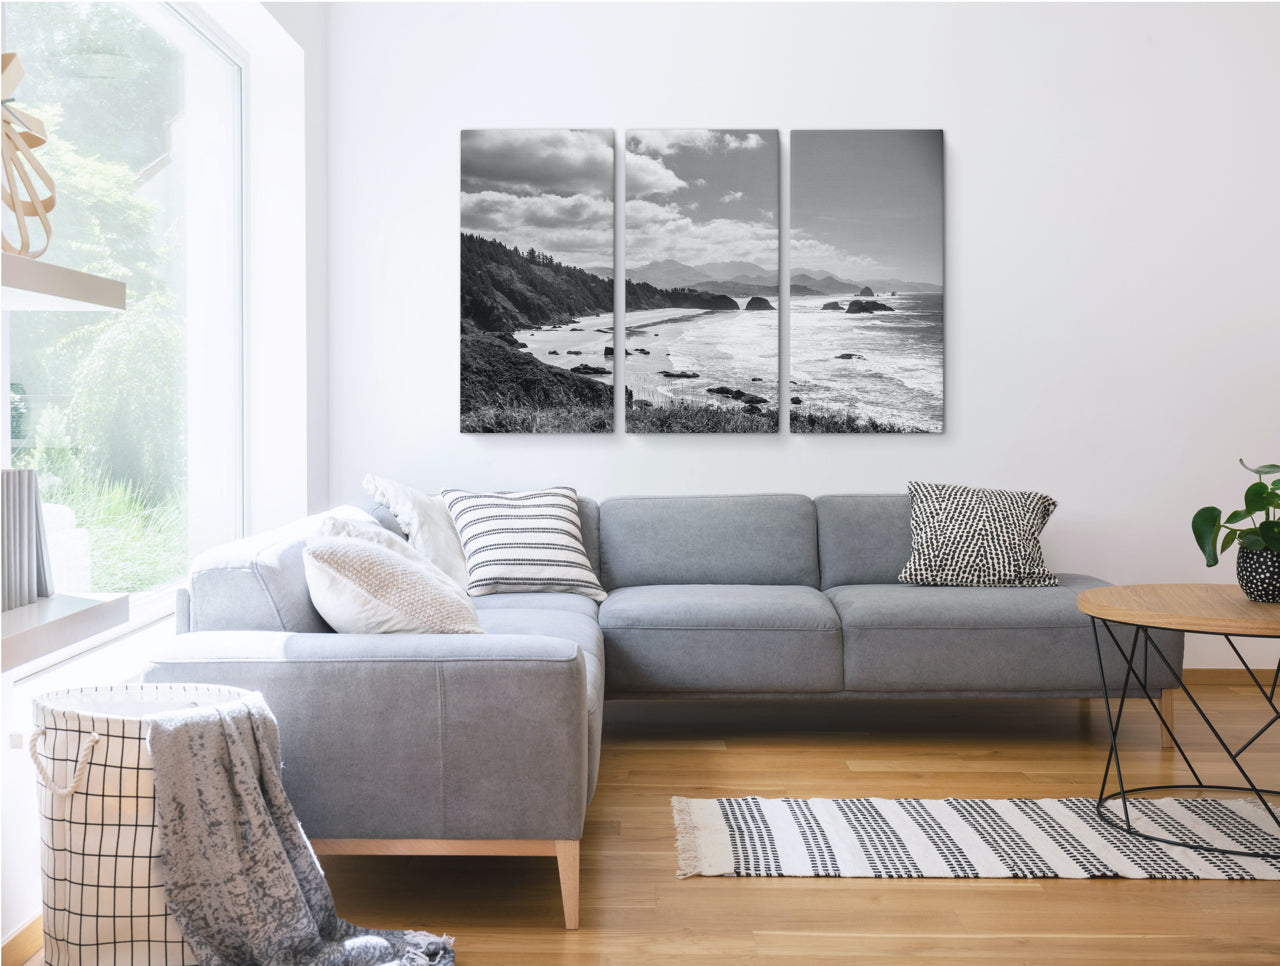 ocean triptych art in living room